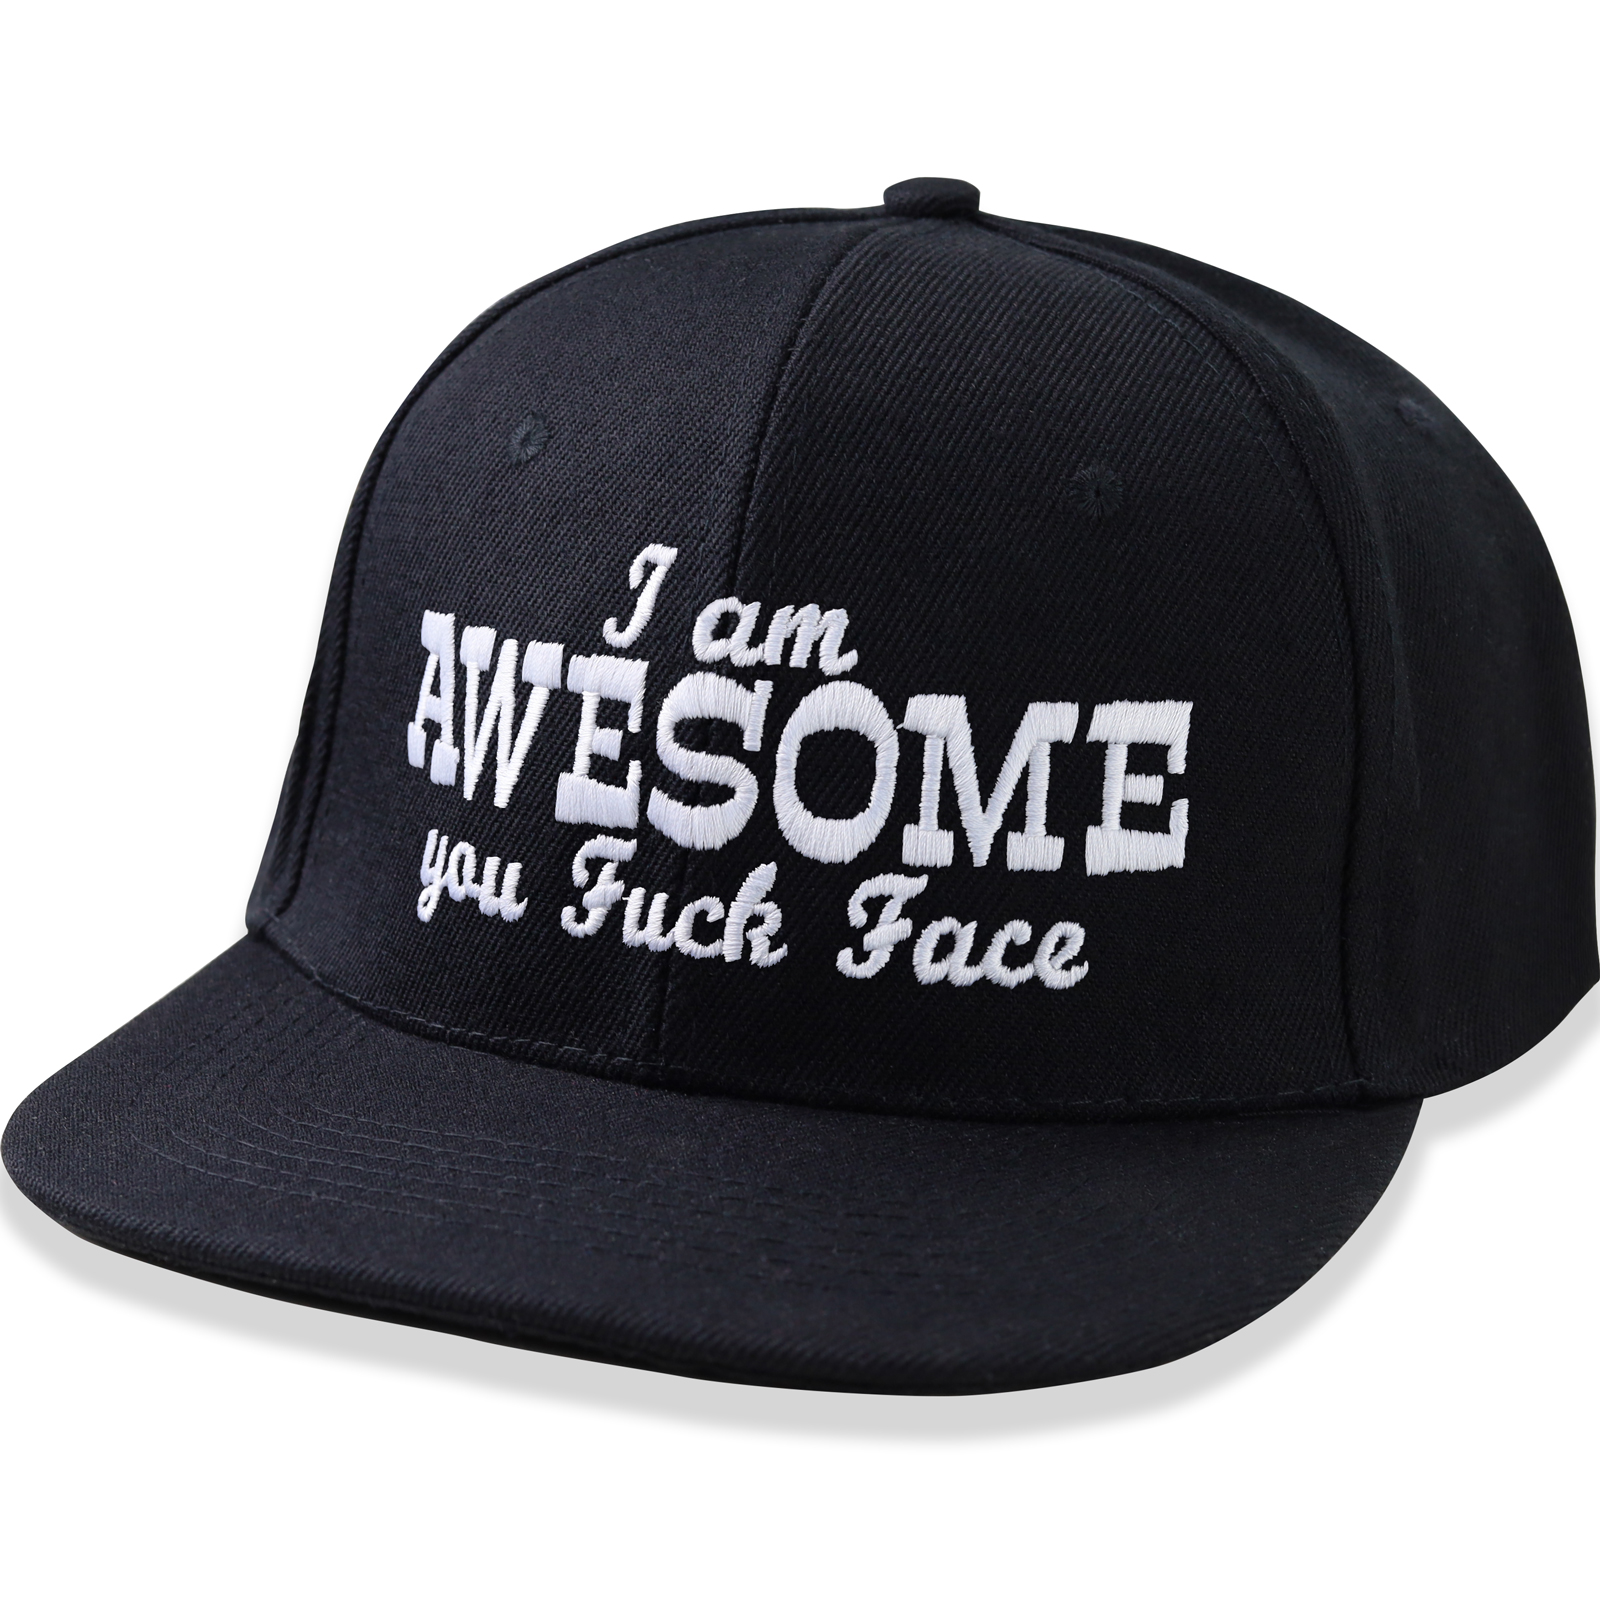 I am awesome - You fuck face - Kappe